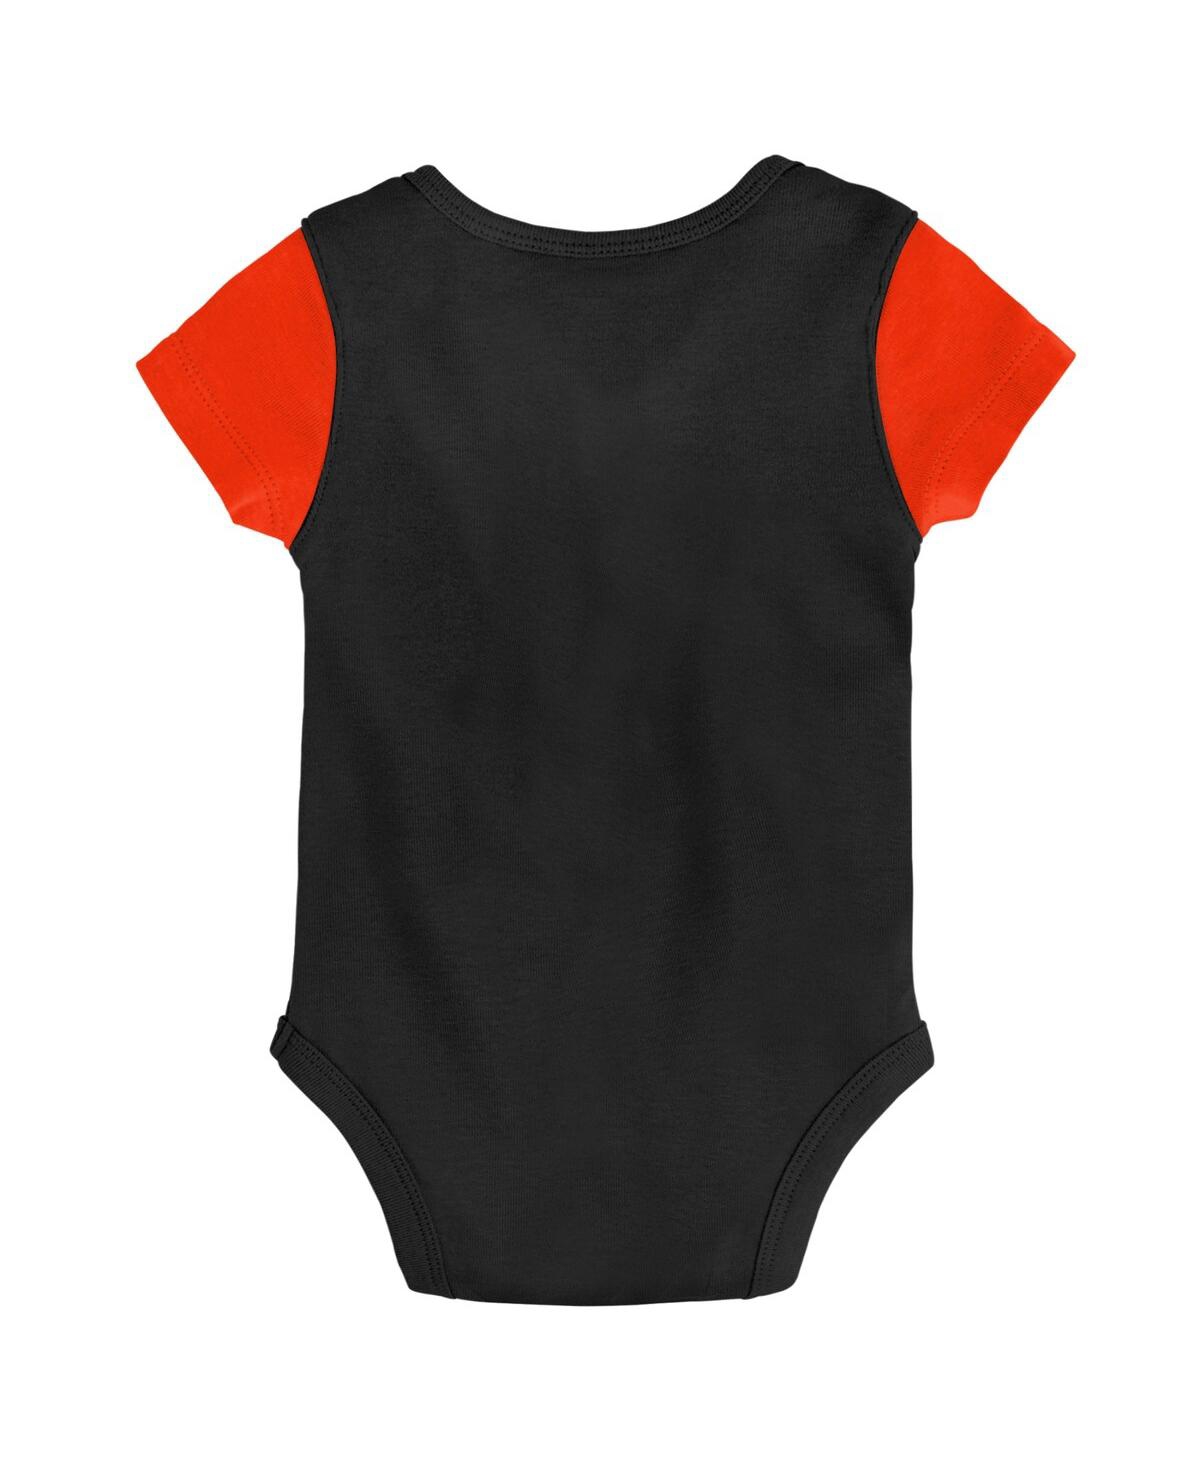 Shop Outerstuff Newborn And Infant Boys And Girls Black, Orange San Francisco Giants Little Champ Three-pack Bodysui In Black,orange